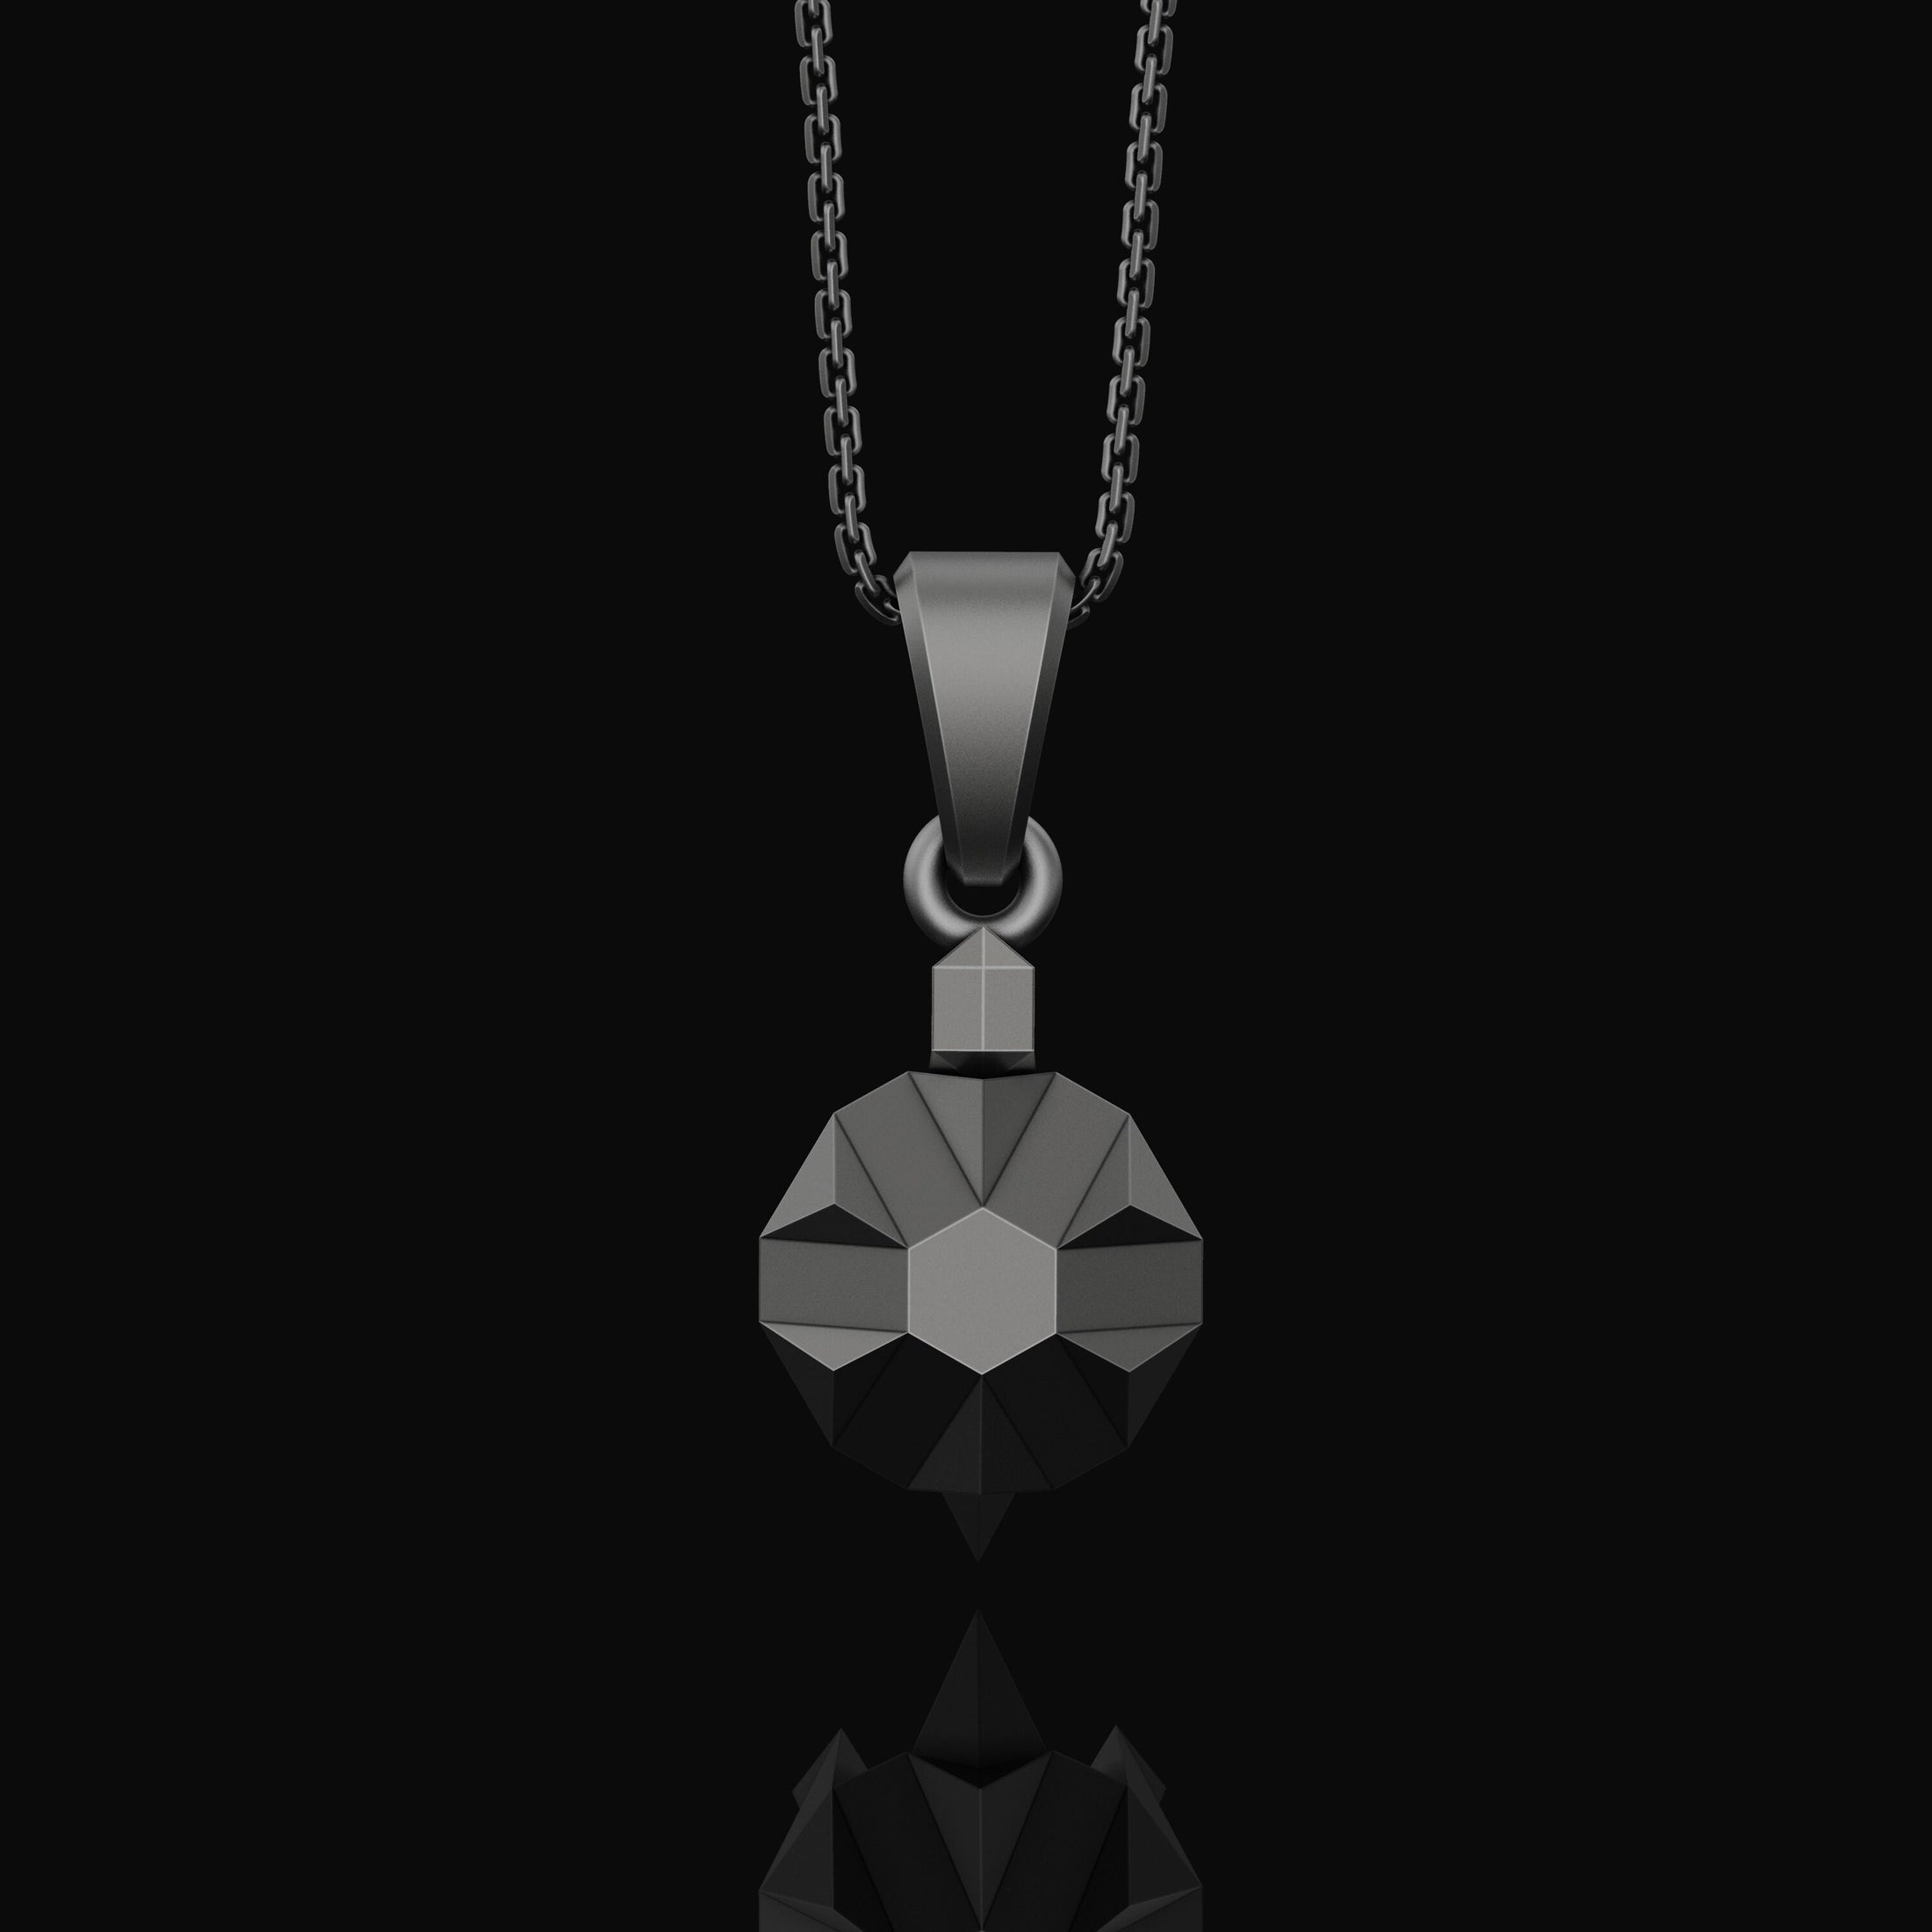 Origami Tortoise Charm Necklace - Silver Geometrical Pendant, Elegant Folded Turtle Design, Unique Artistic Jewelry Oxidized Finish